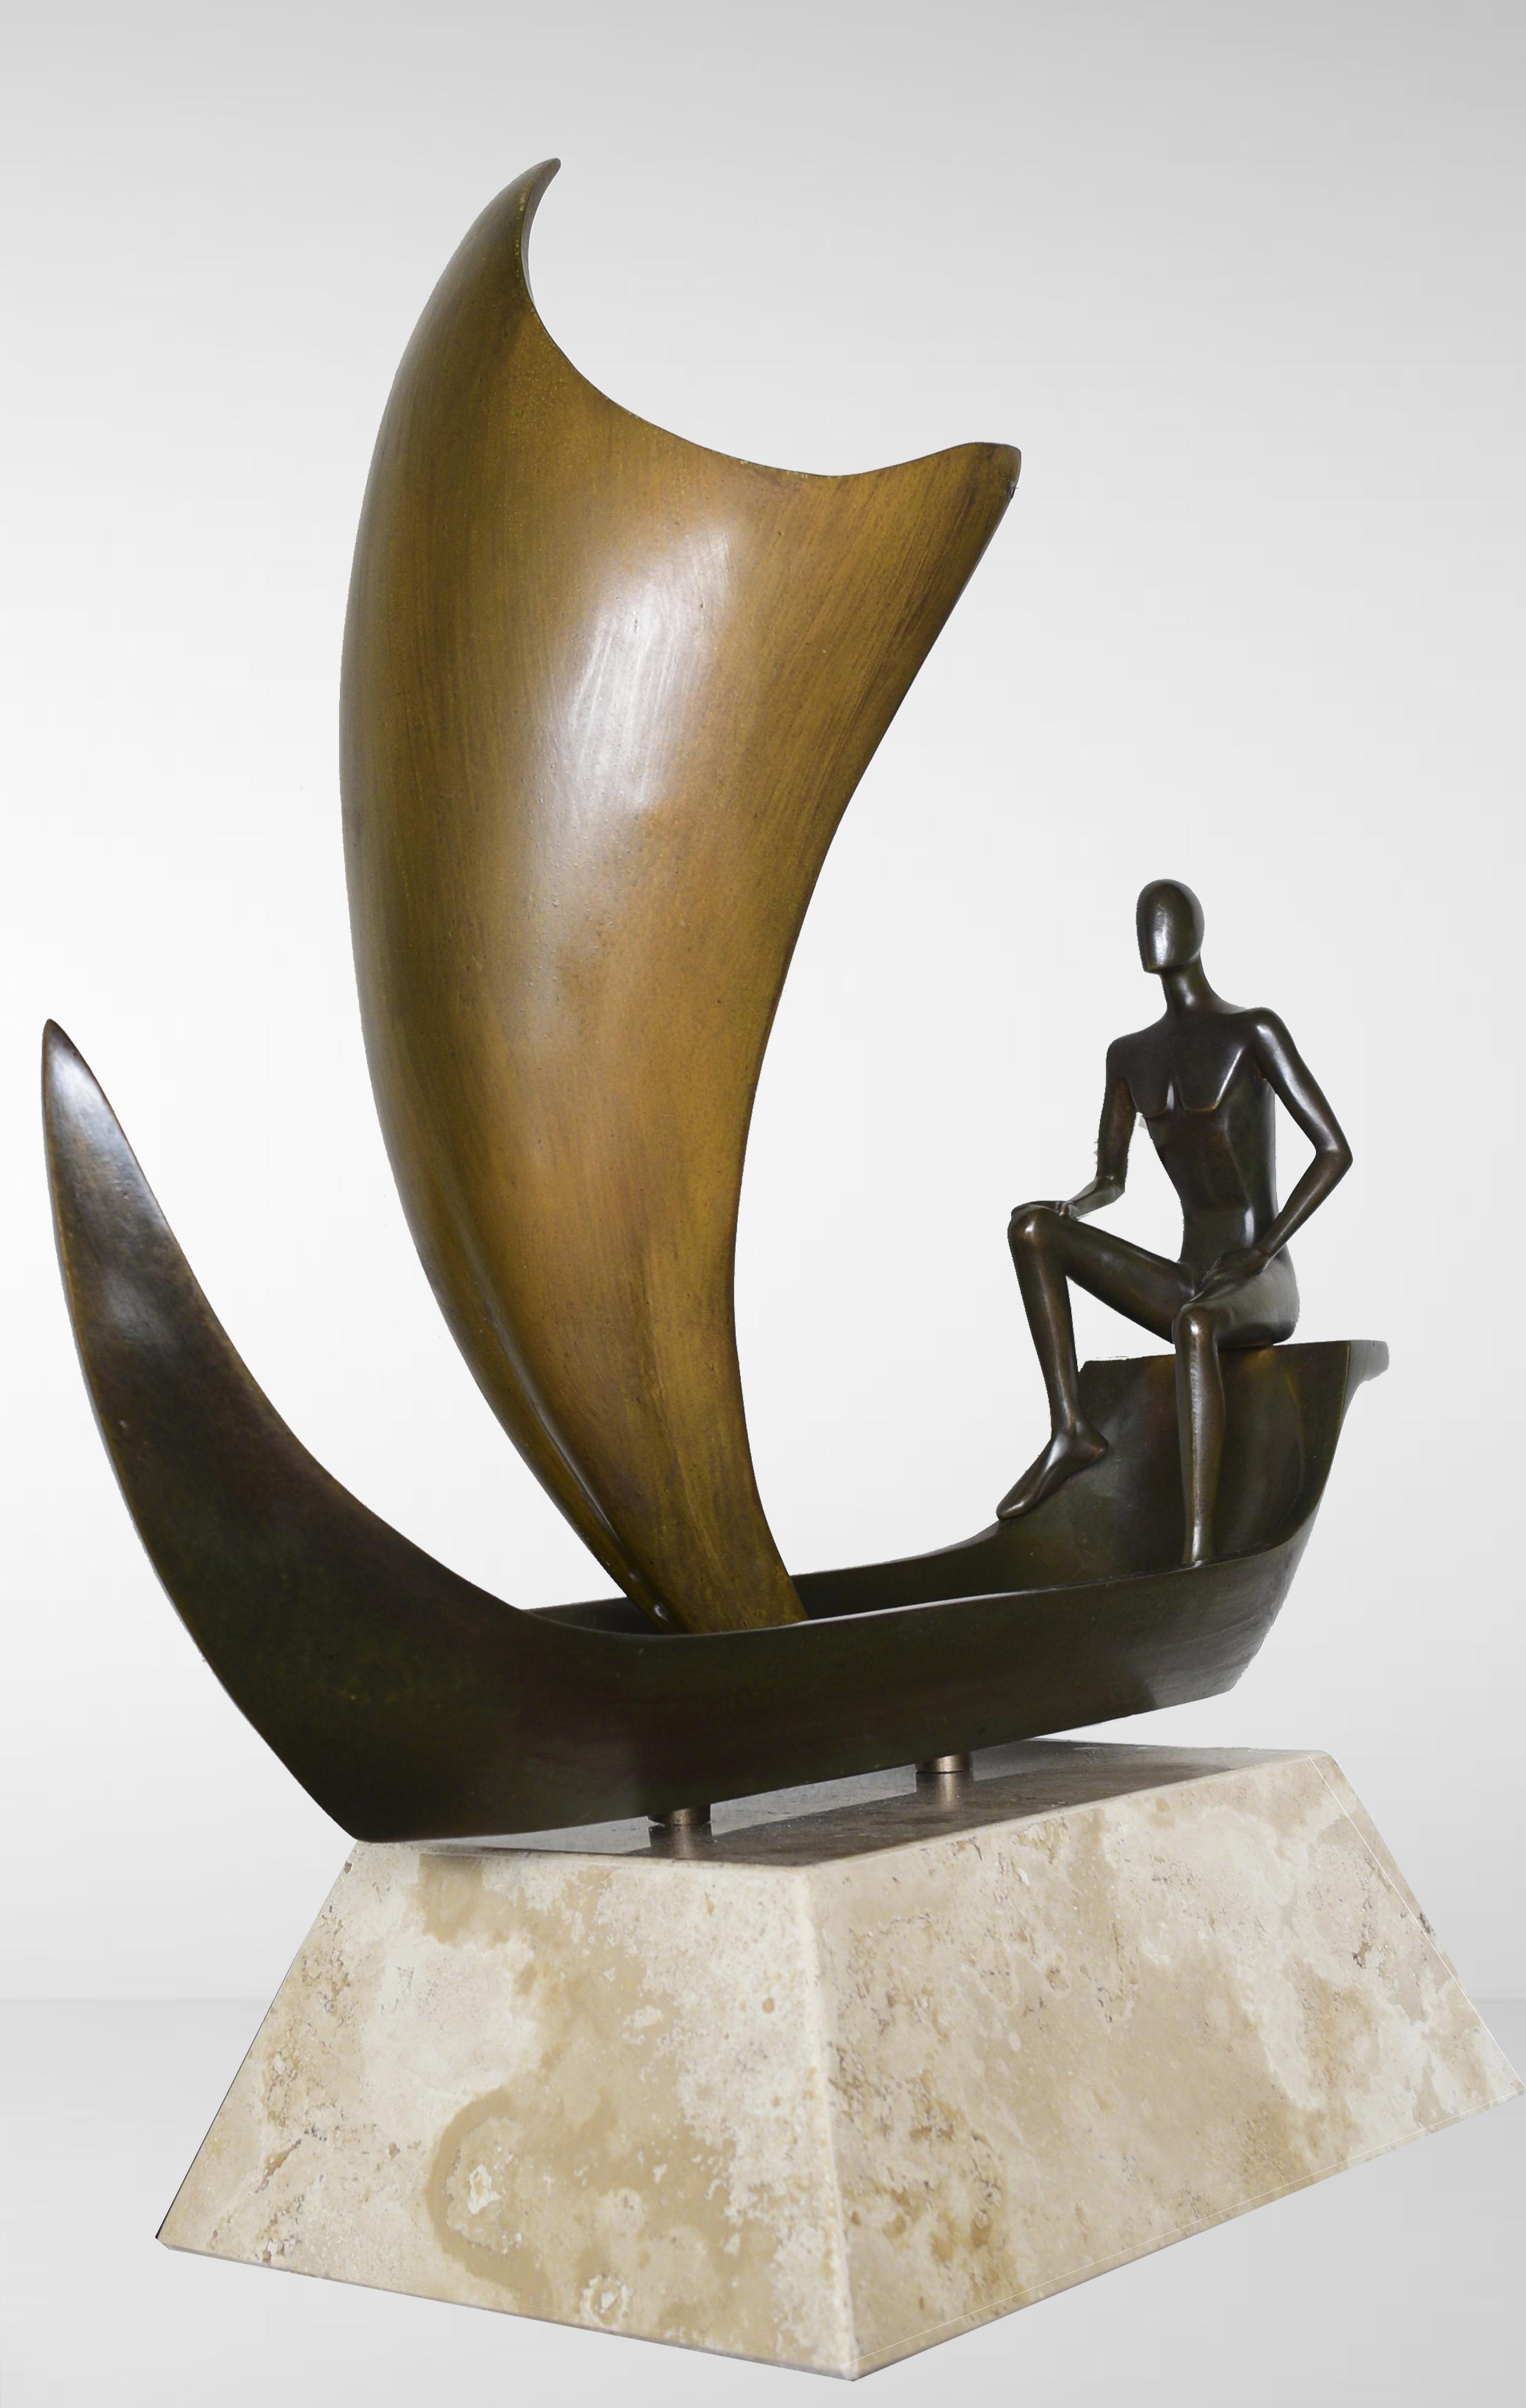 VIAJERO (TRAVELER), bronze, lost wax casting, 56 cm x 46 cm x 16 cm